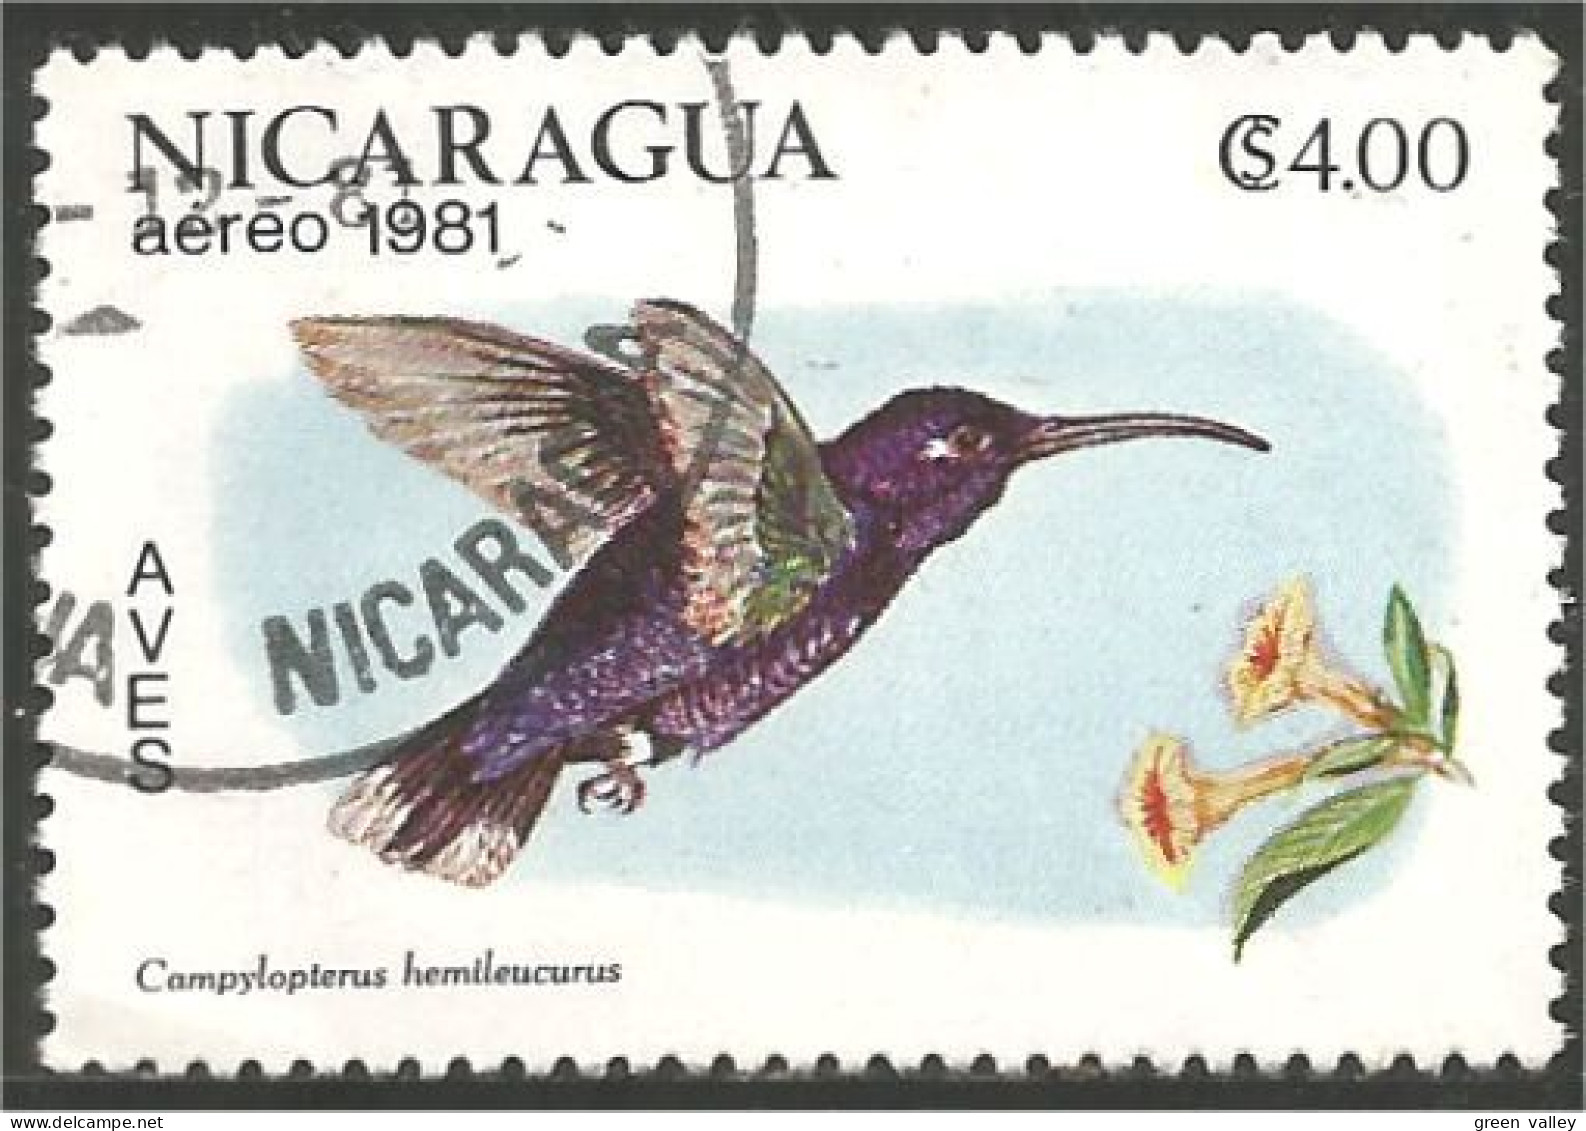 684 Nicaragua Oiseau-mouche Colibri Hummingbird Kolibrie Kolibri (NIC-439) - Colibrì